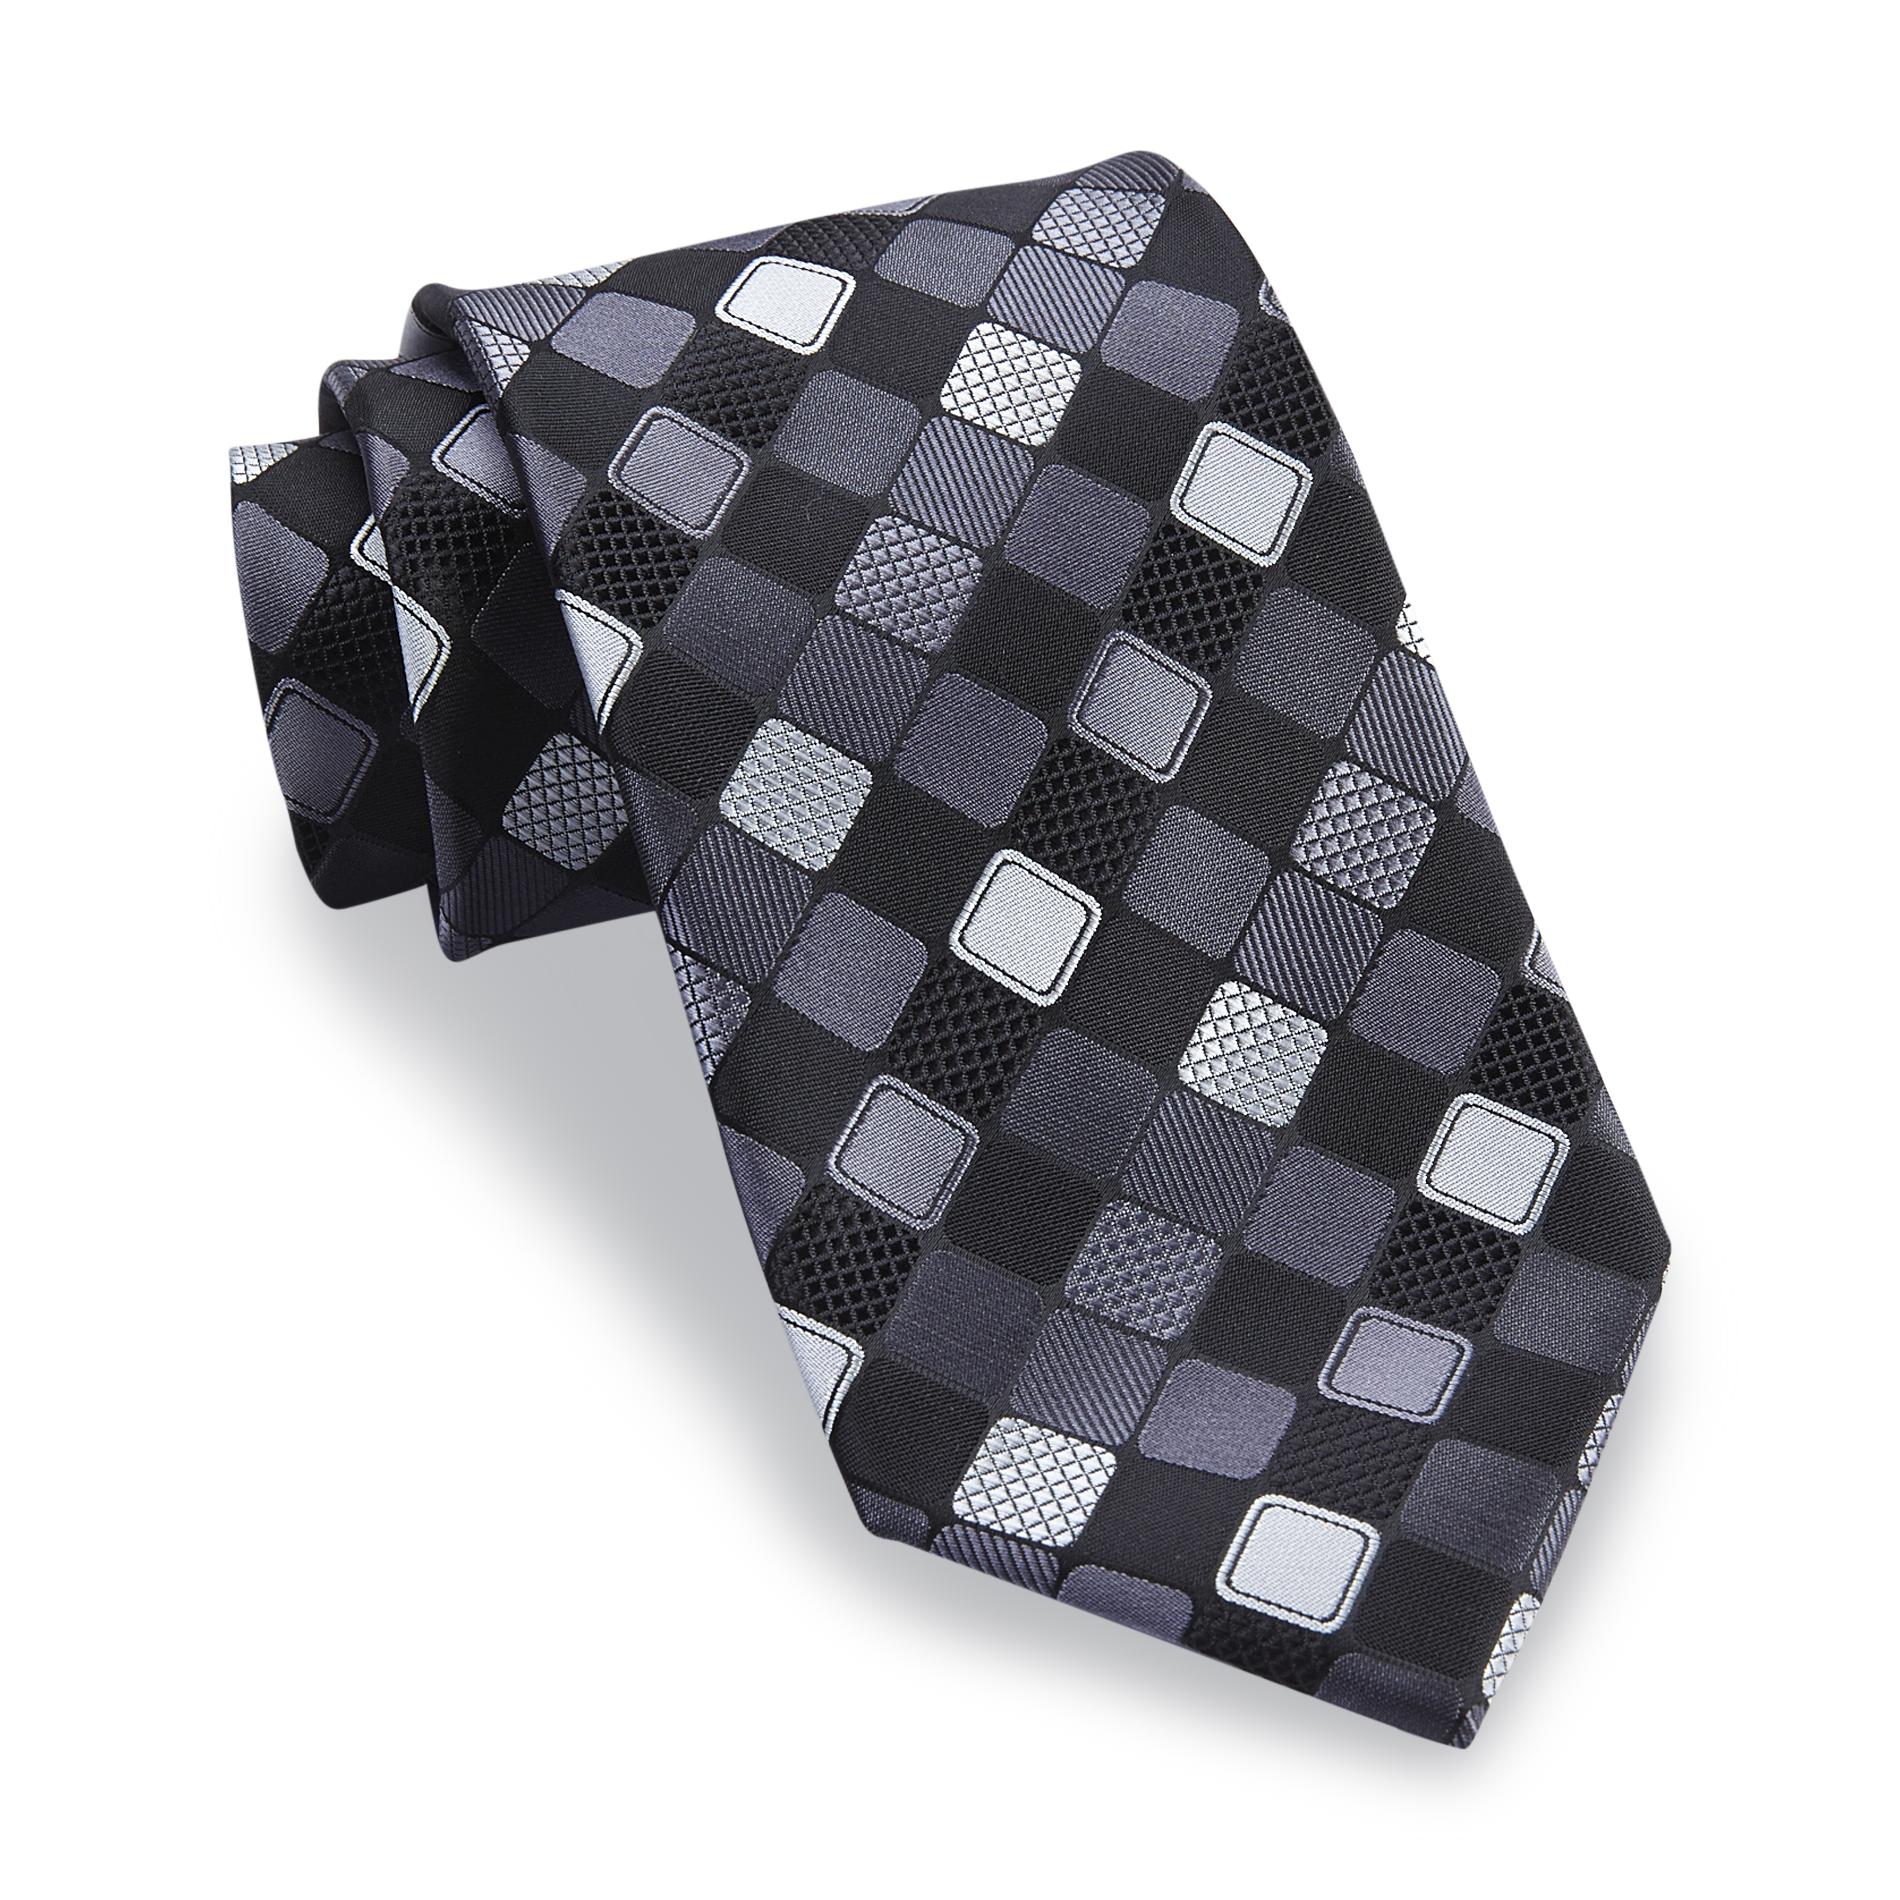 David Taylor Collection Men's Necktie - Multi-Square